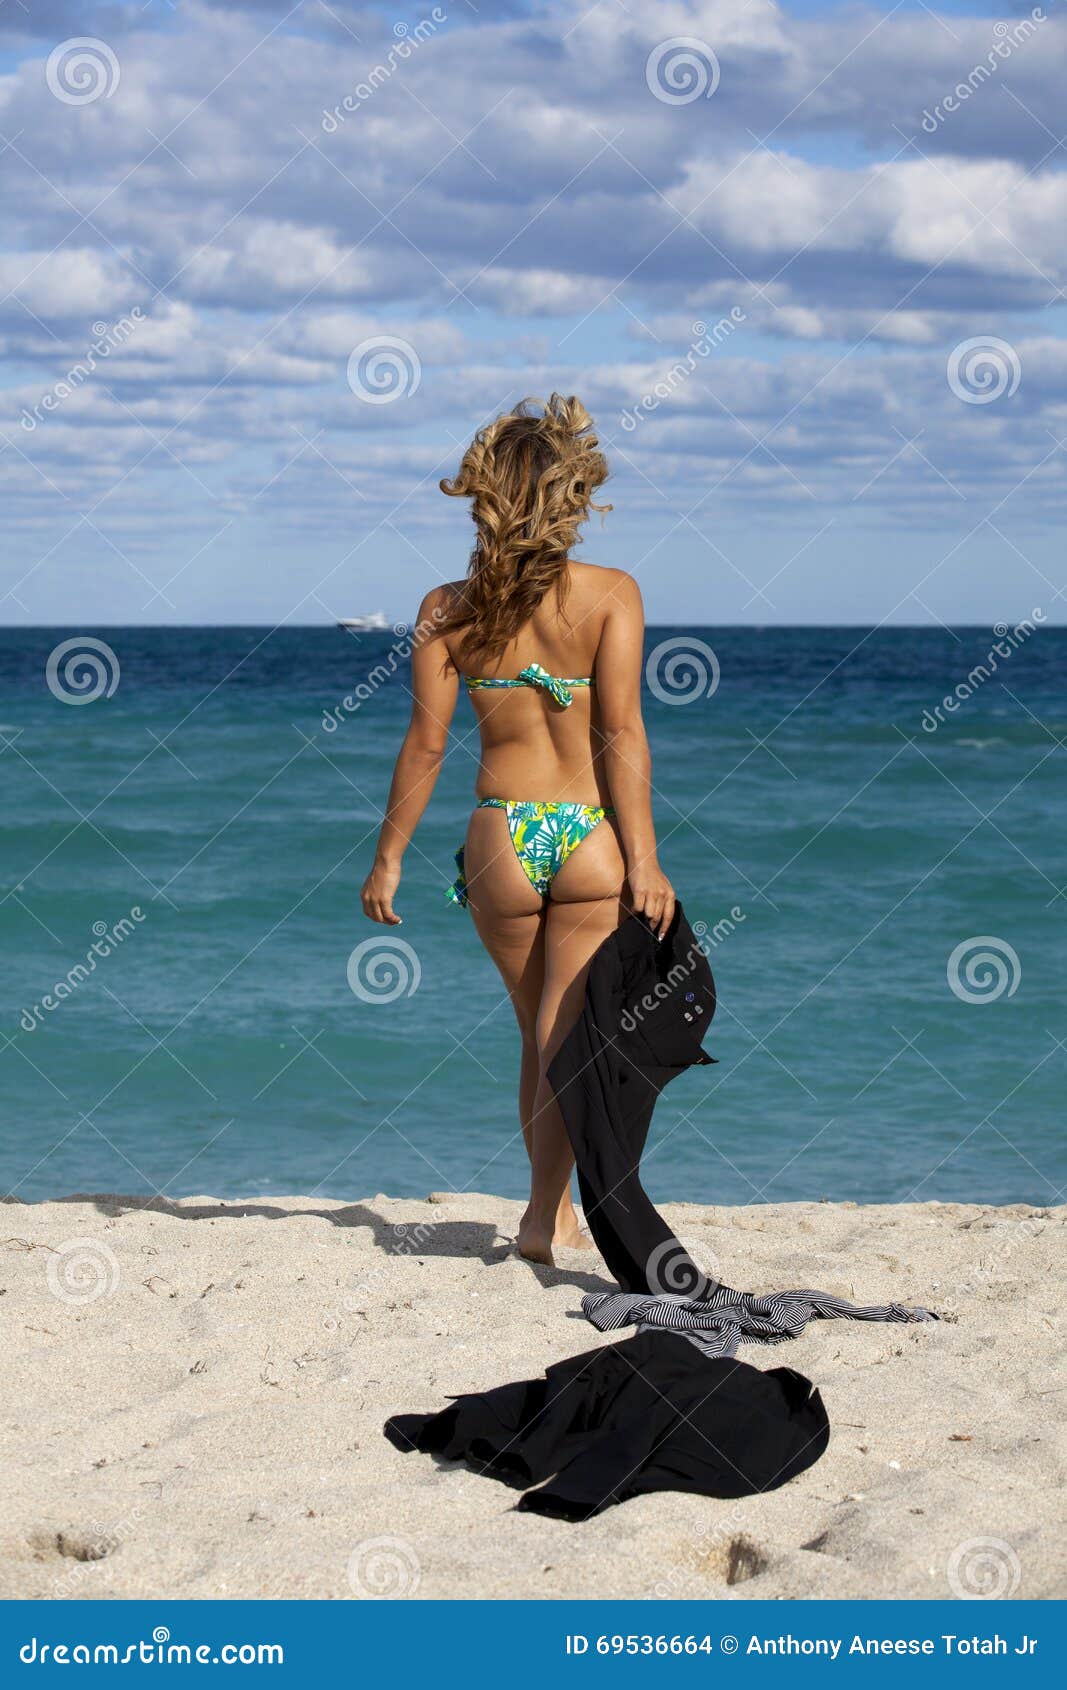 153 Woman Removing Bikini Stock Photos - Free & Royalty-Free Stock